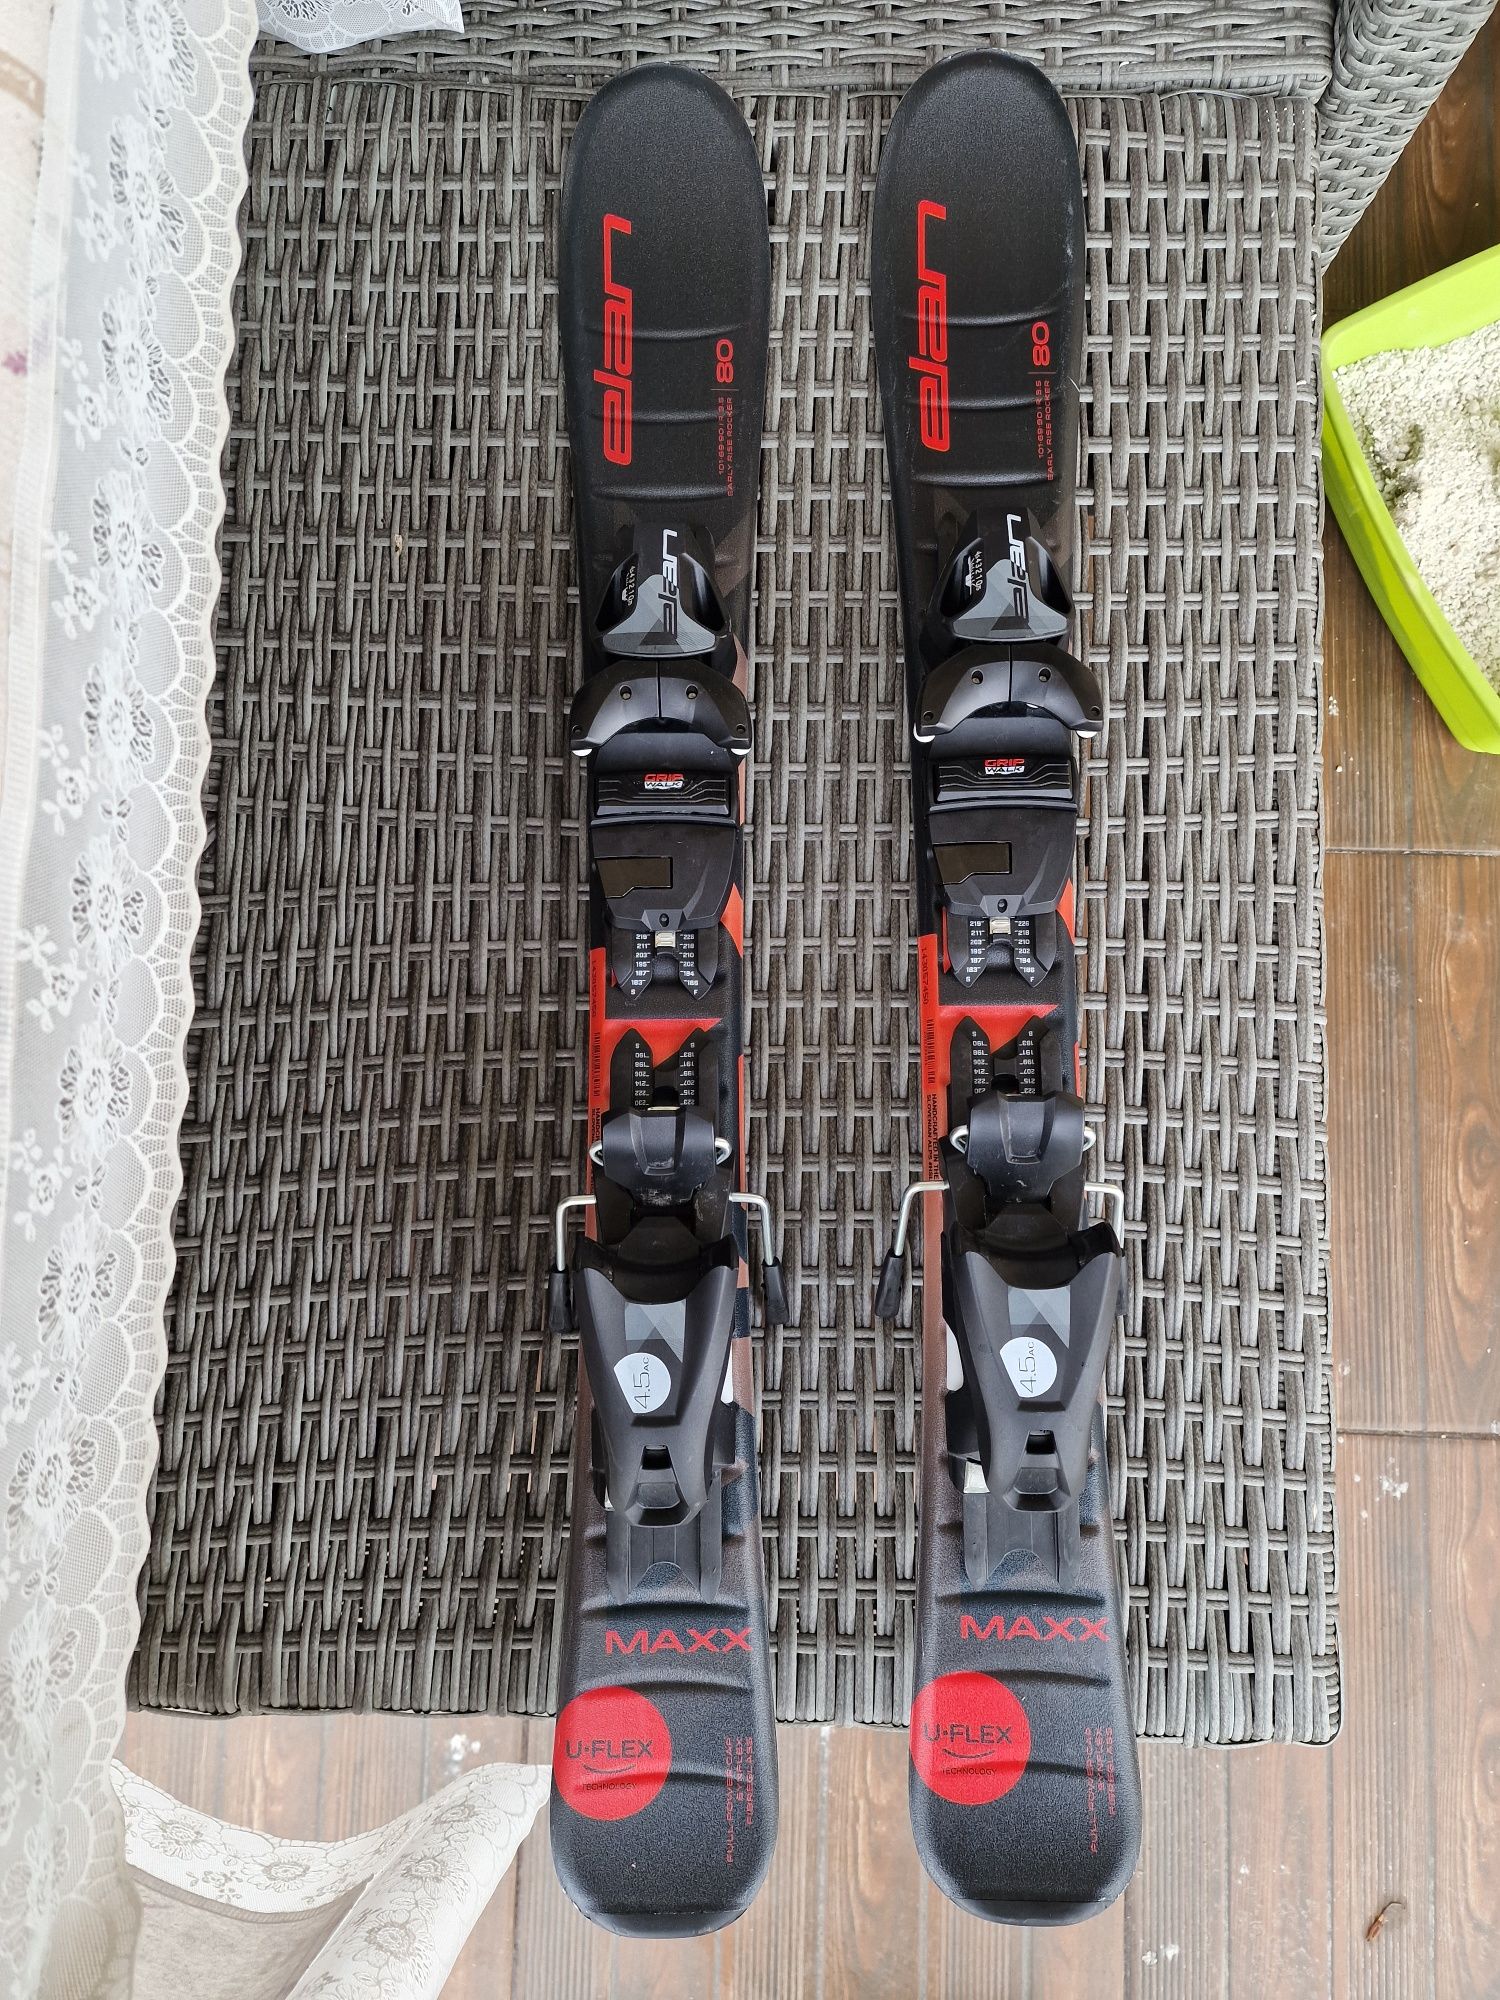 Schiuri Elan MAXX QS, cu legaturi model 4.5, copii, 80cm, negru/rosu